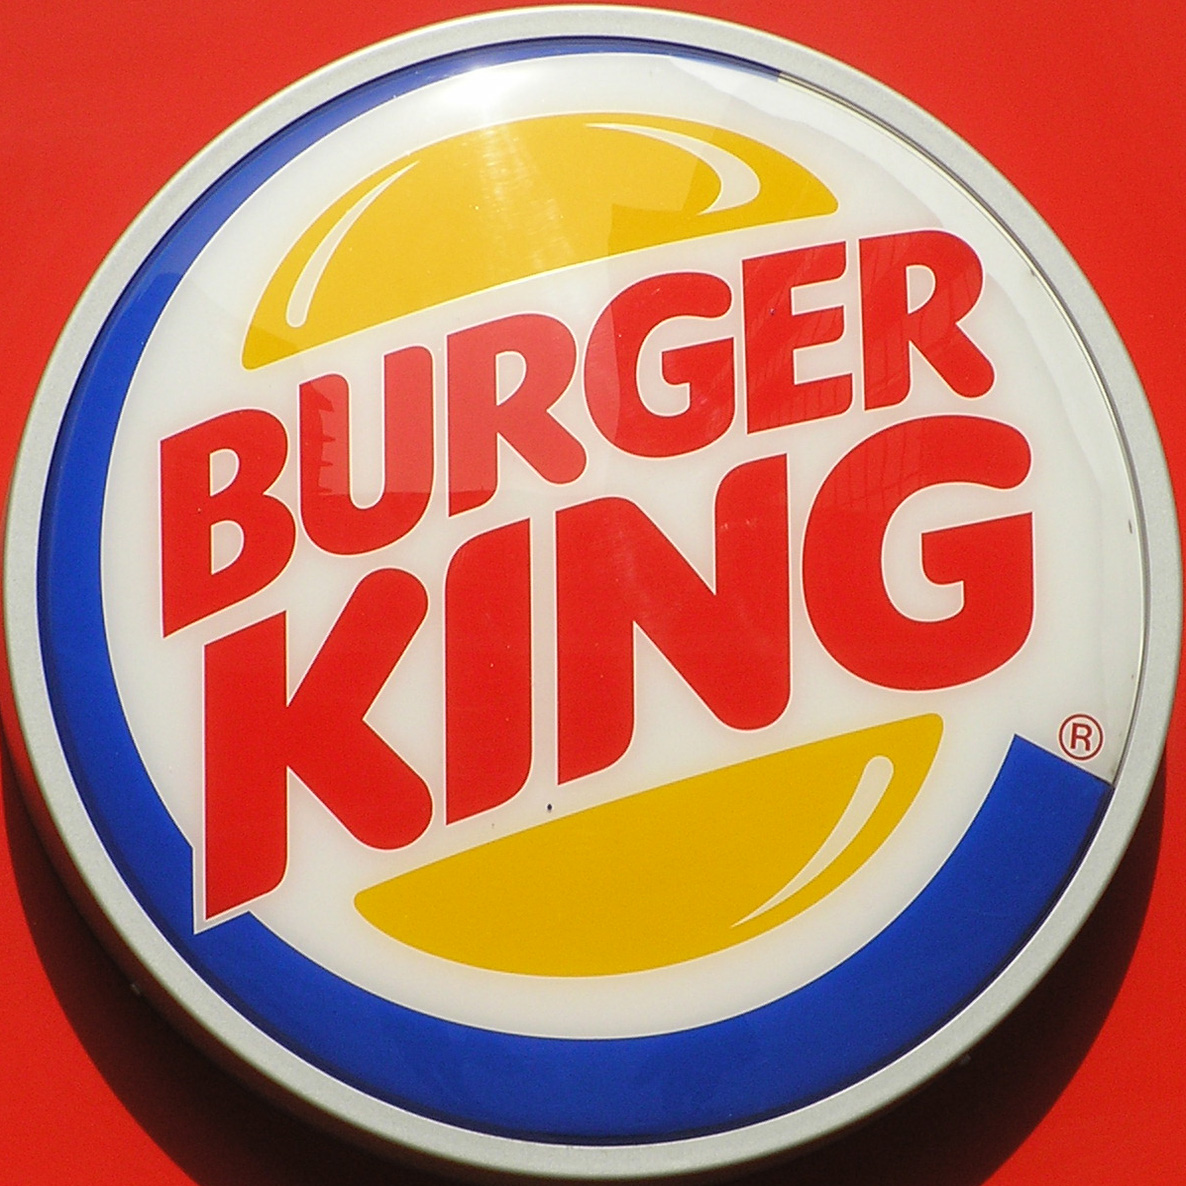 Burger King Nuevo Logo